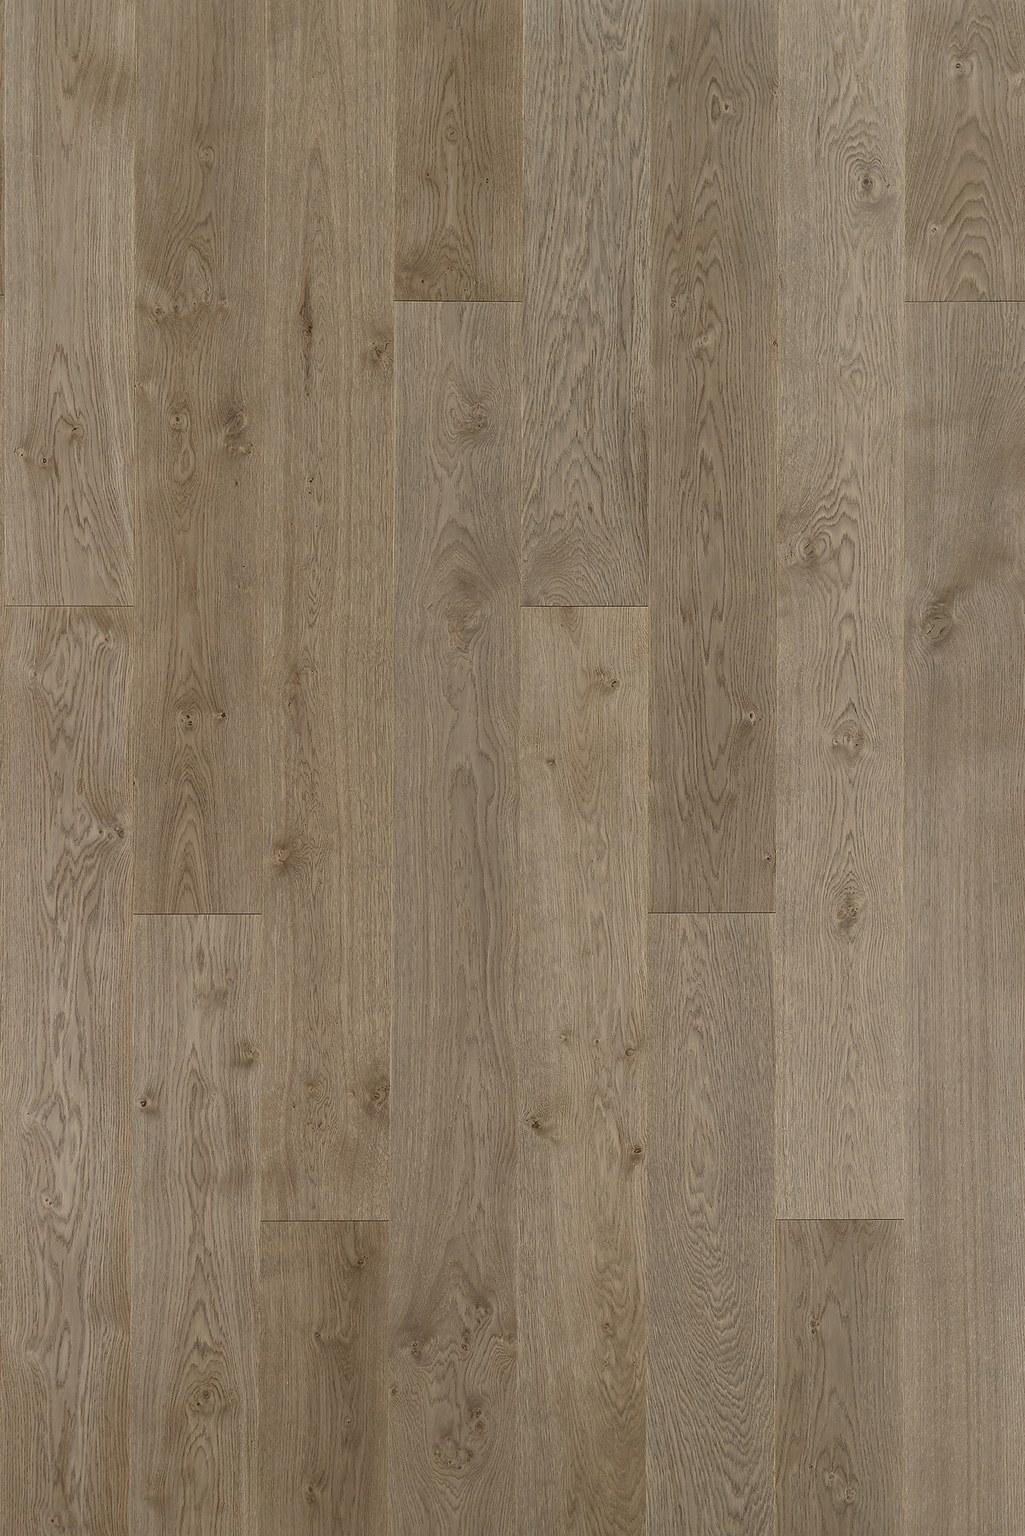 Timberwise parketti lankkuparketti puulattia wooden floor parquet plank Tammi Oak Classic Biscuit Grey_2D1